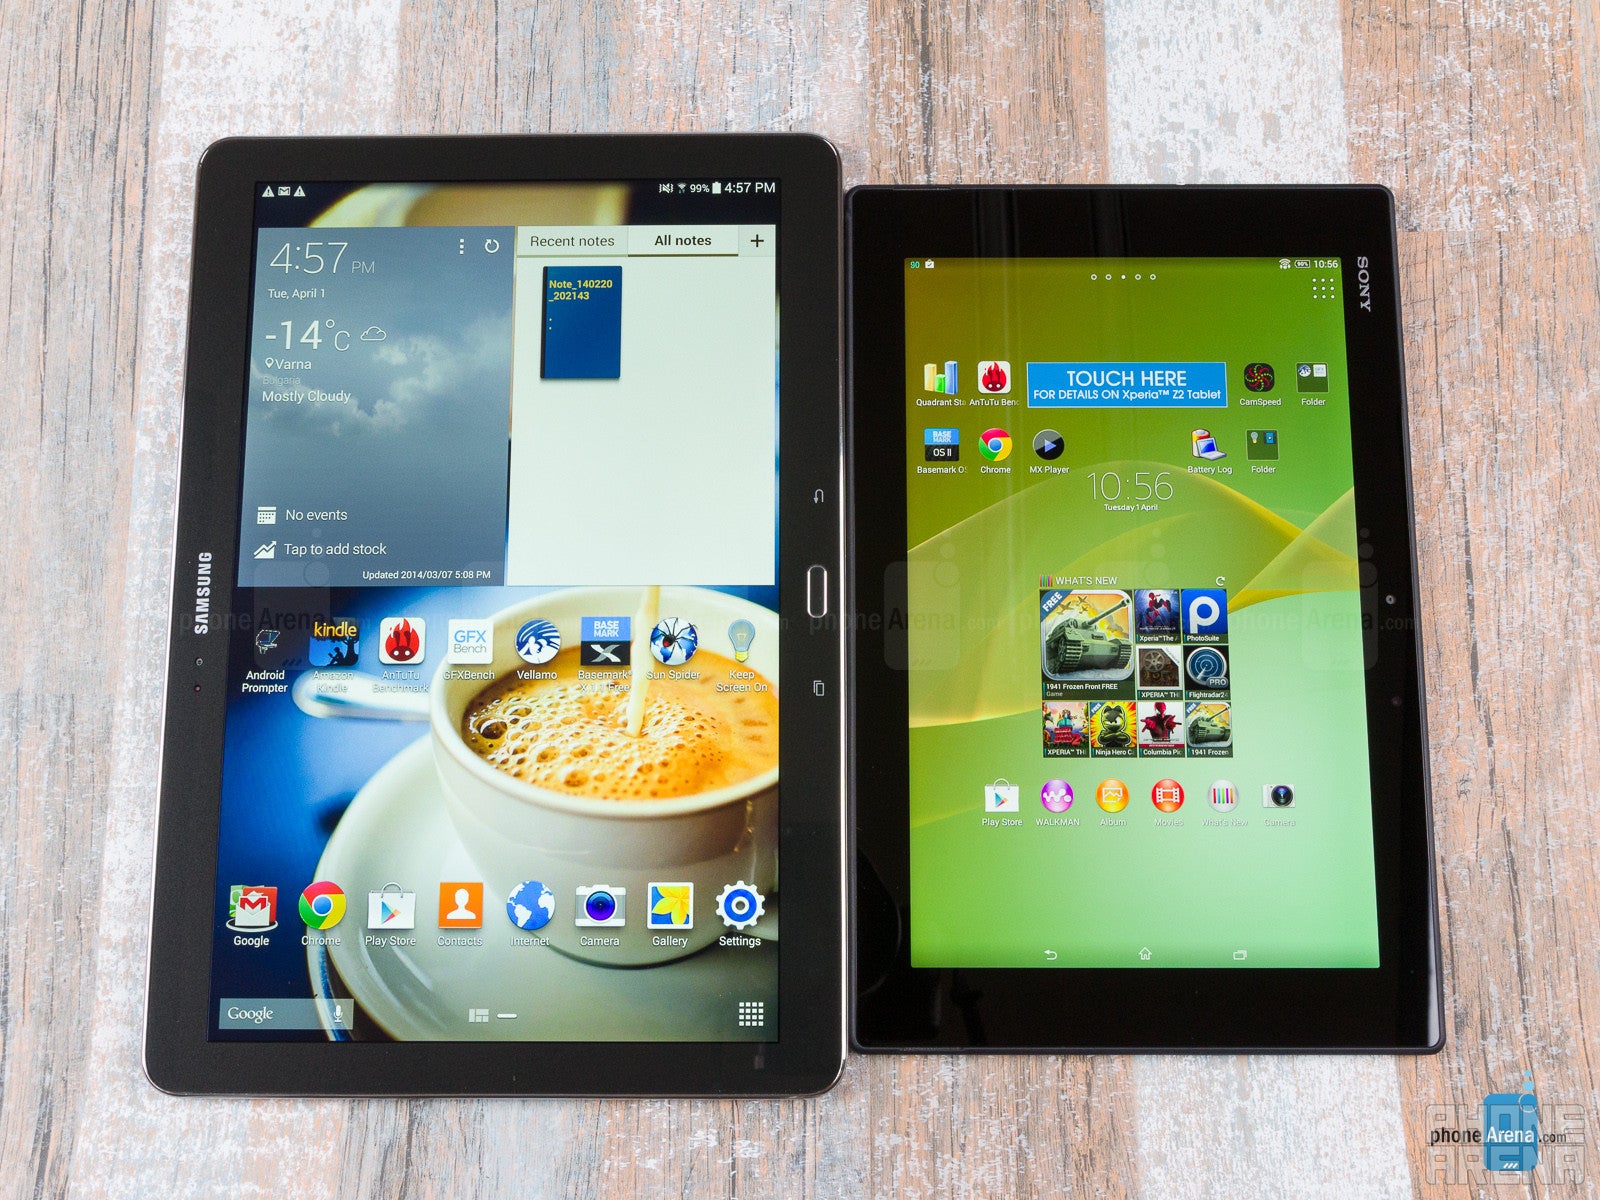 Sony Xperia Z2 Tablet vs Samsung Galaxy NotePRO 12.2